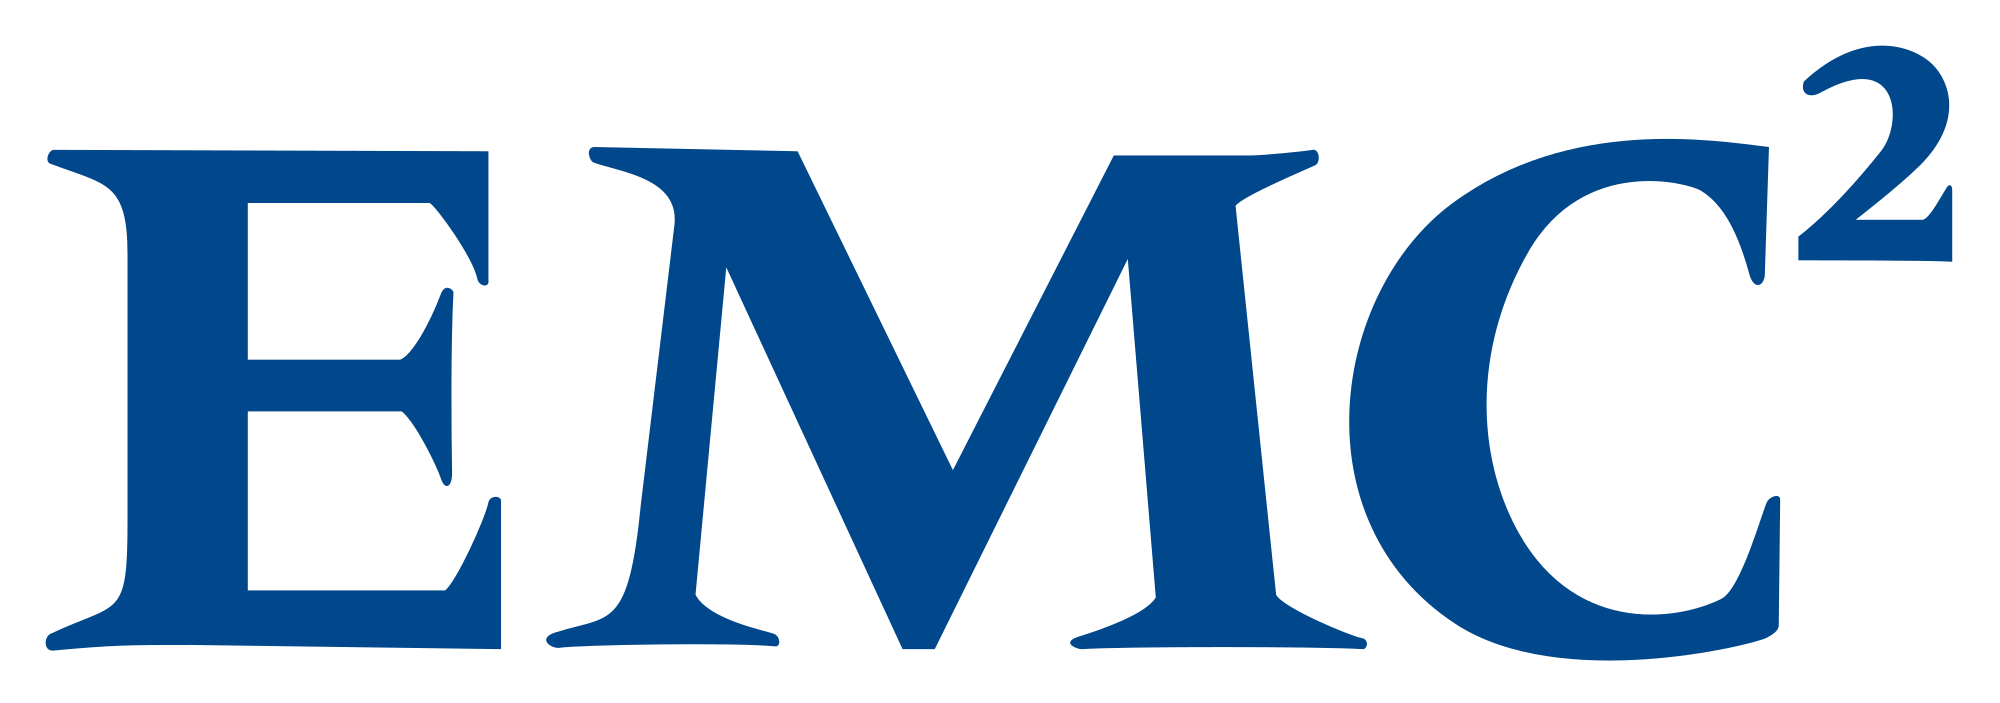 EMC_Corporation_logo